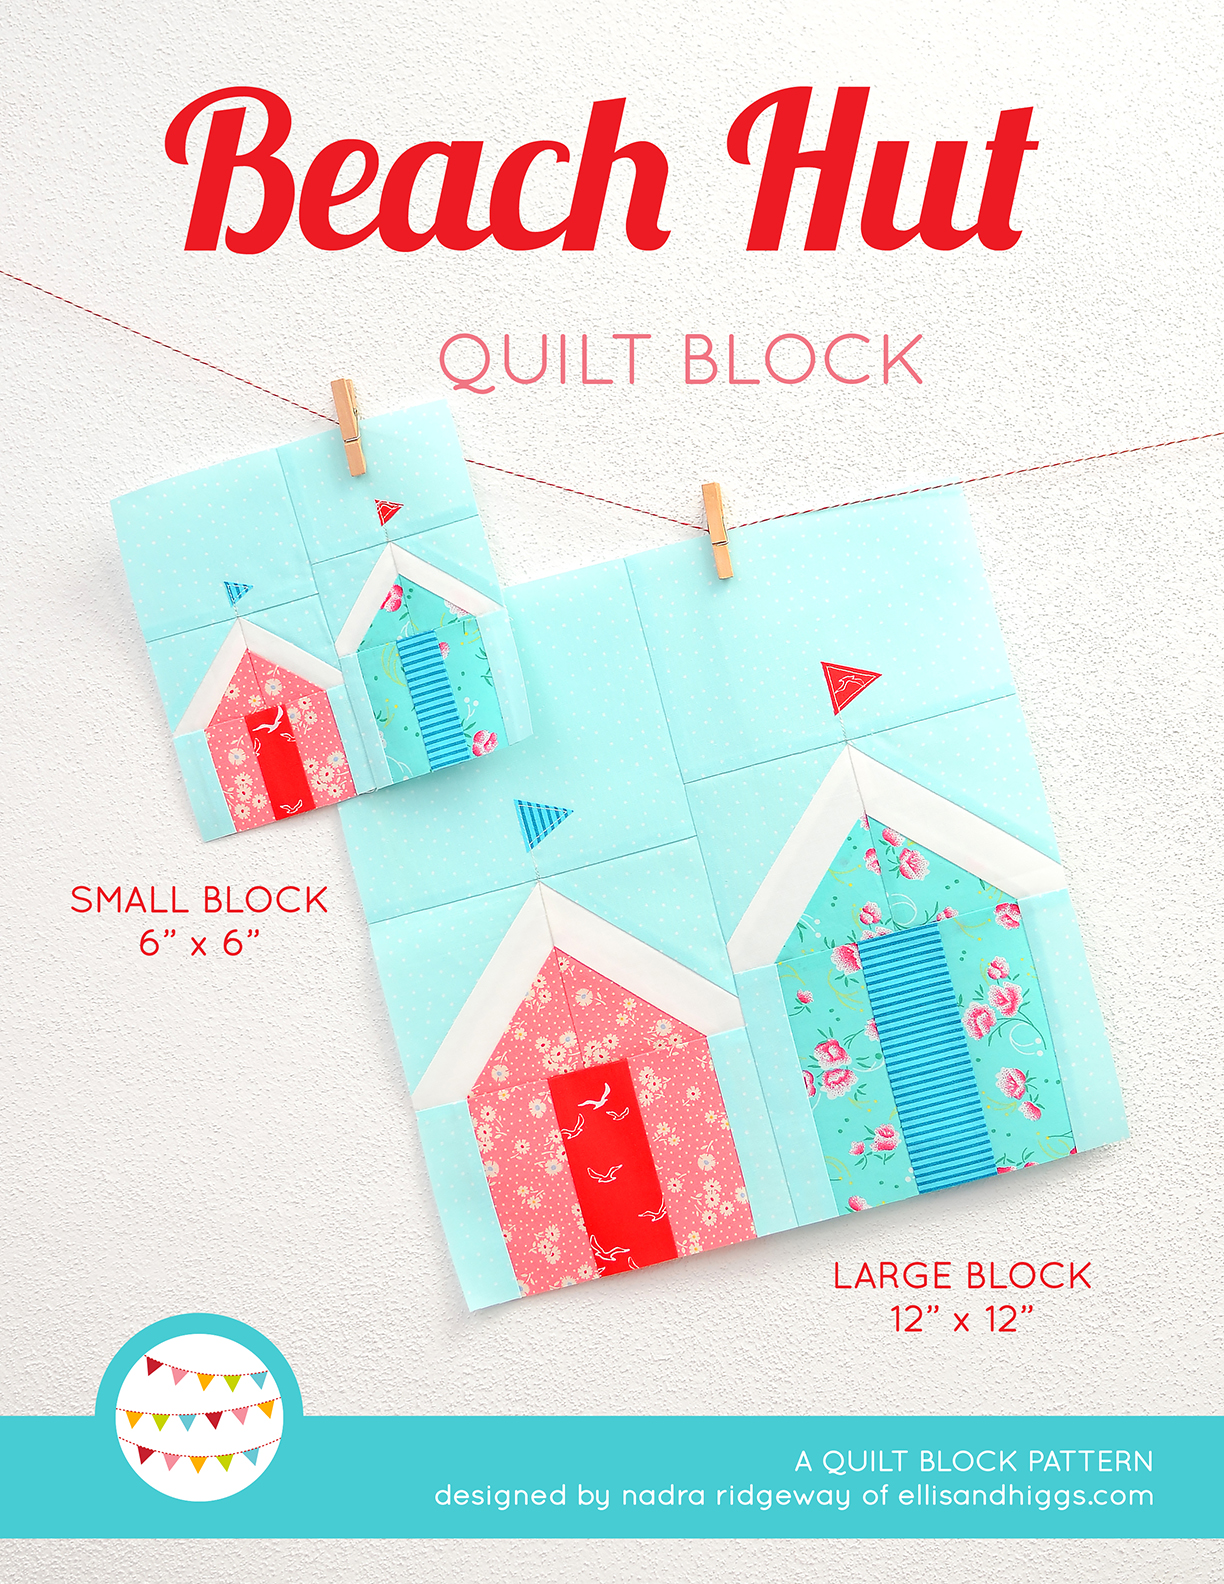 Beach Hut quilt patterns